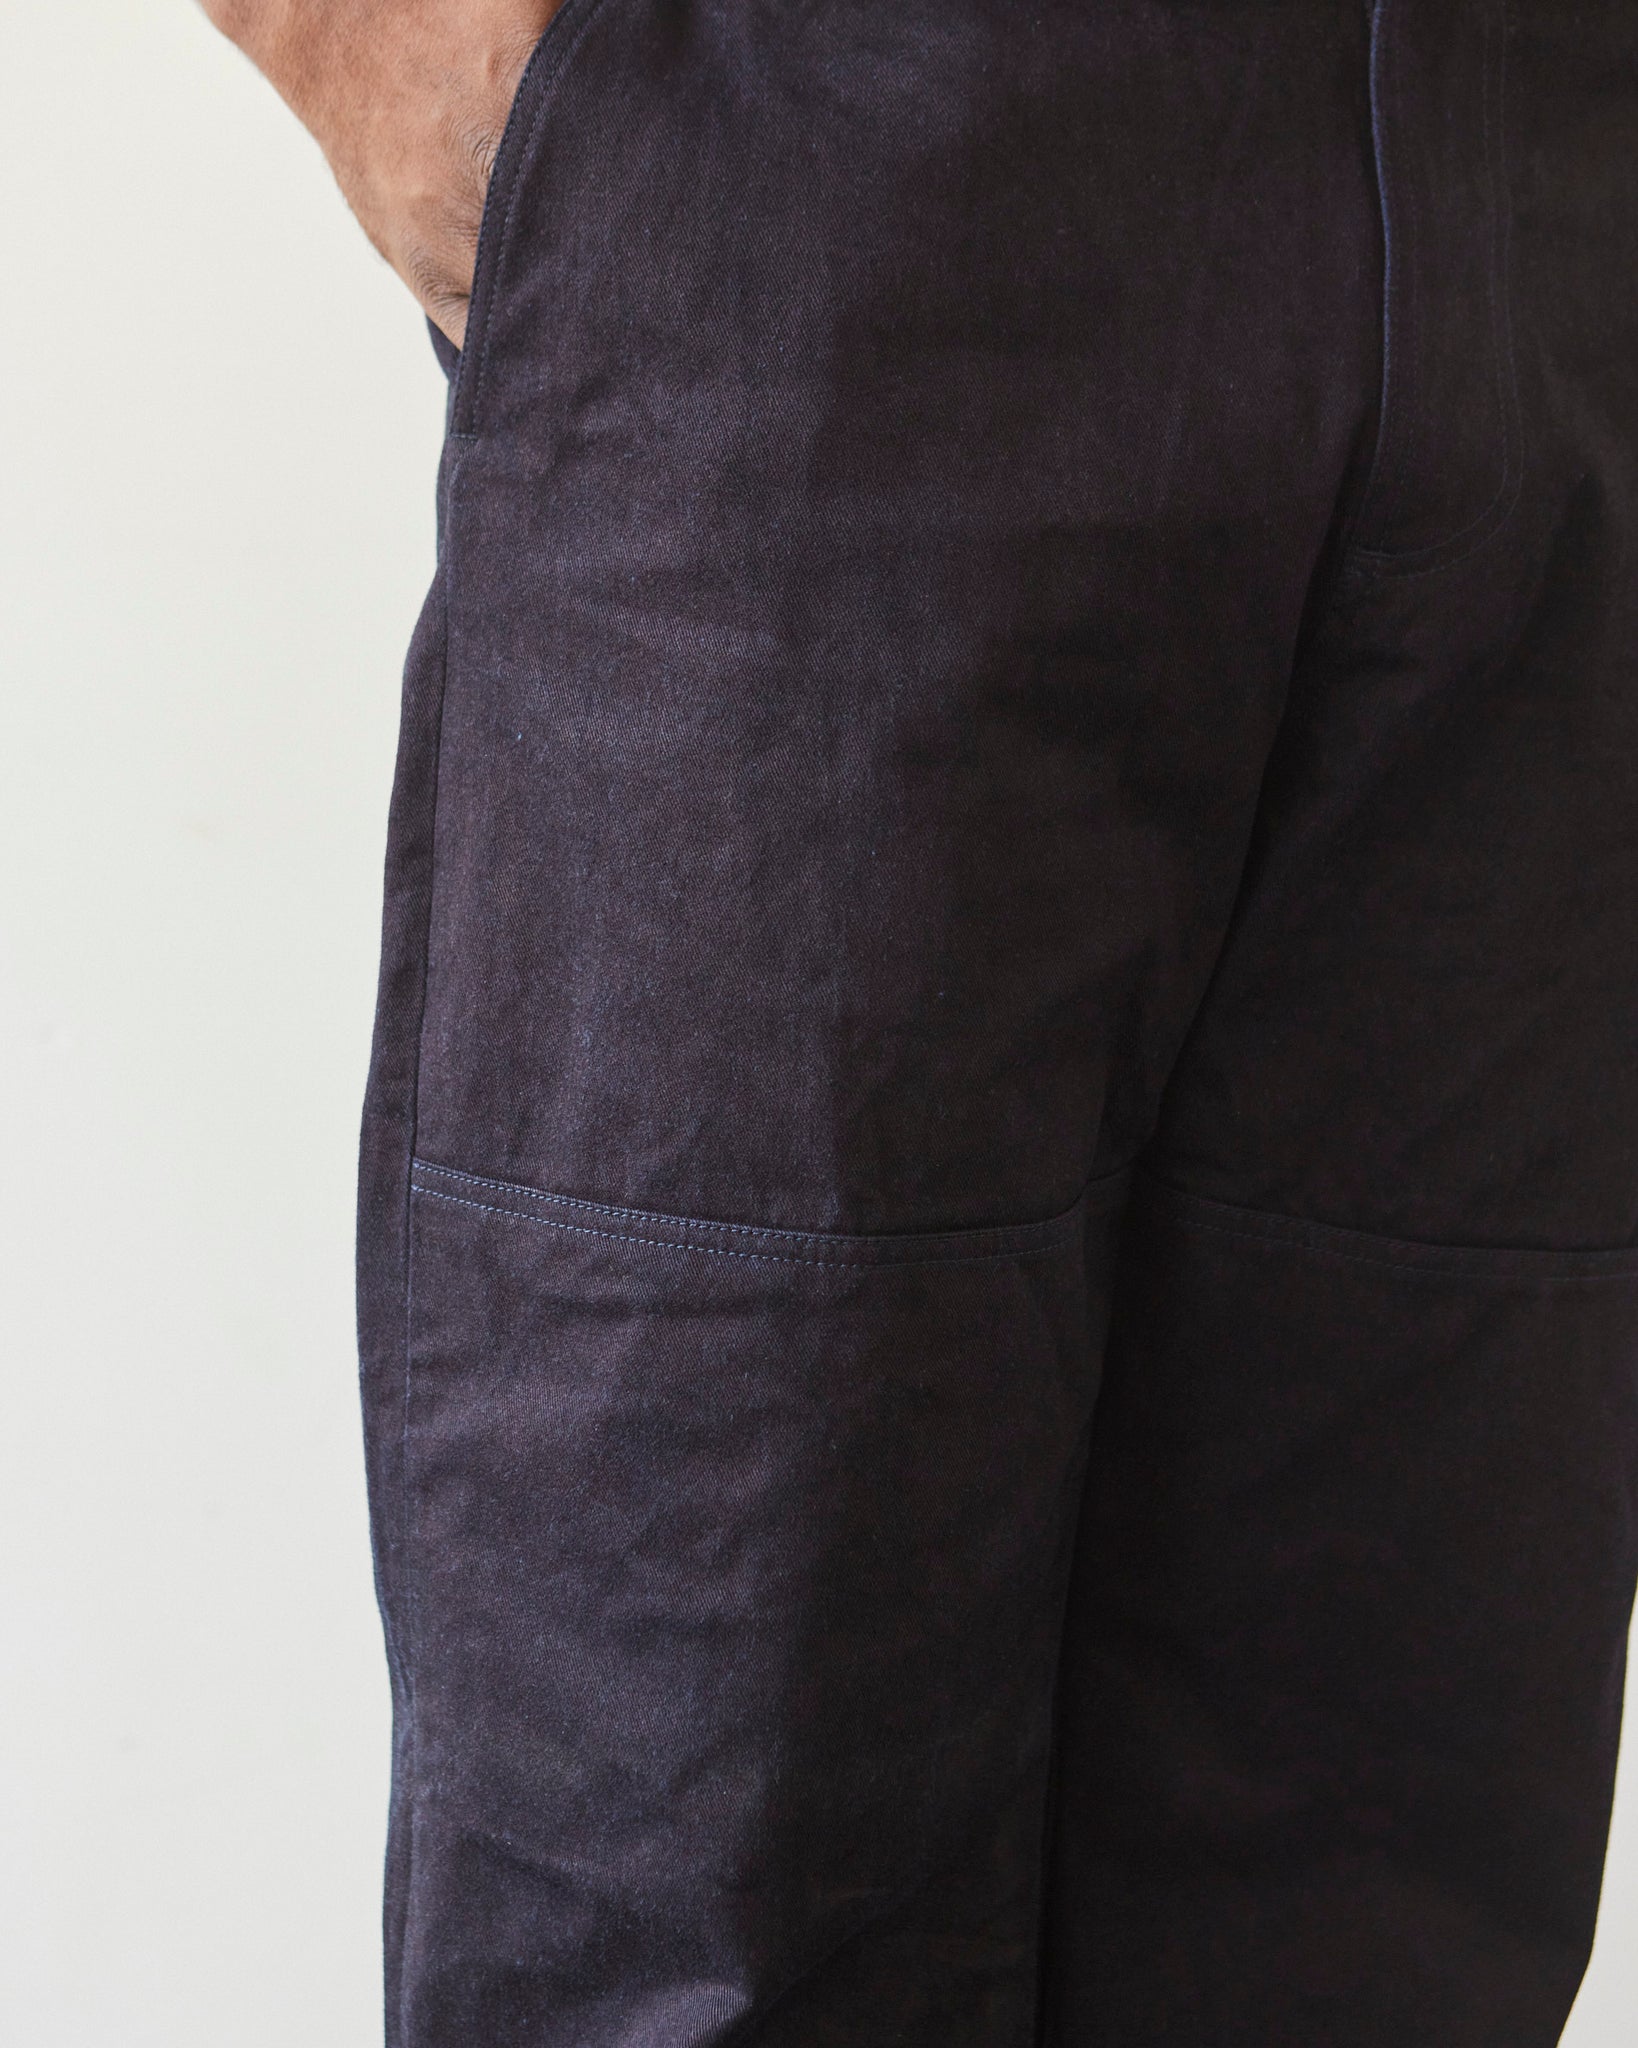 Arpenteur 4 Pocket Pants, Dark Woad Blue